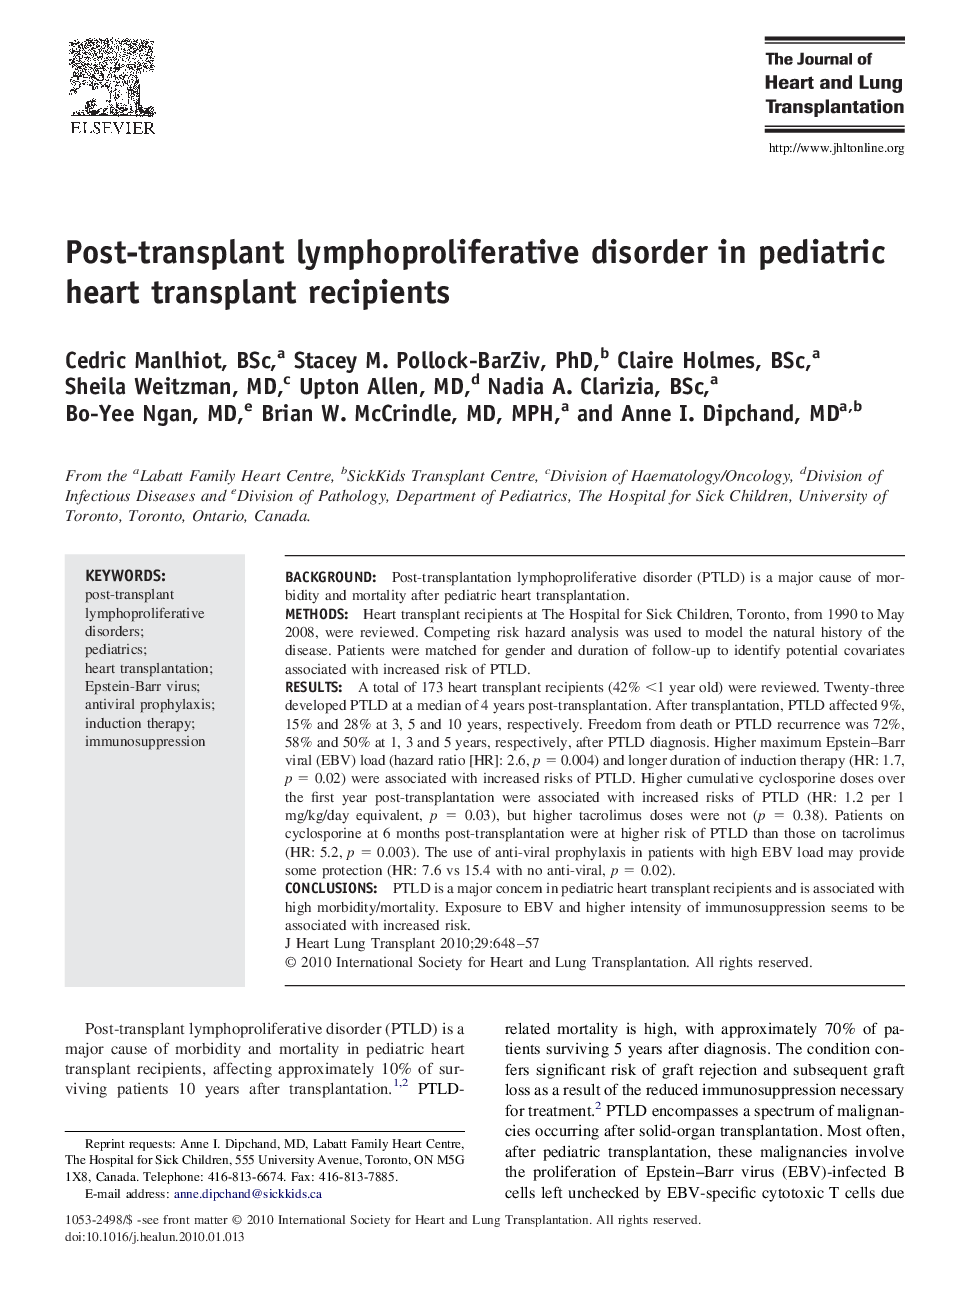 Post-transplant lymphoproliferative disorder in pediatric heart transplant recipients